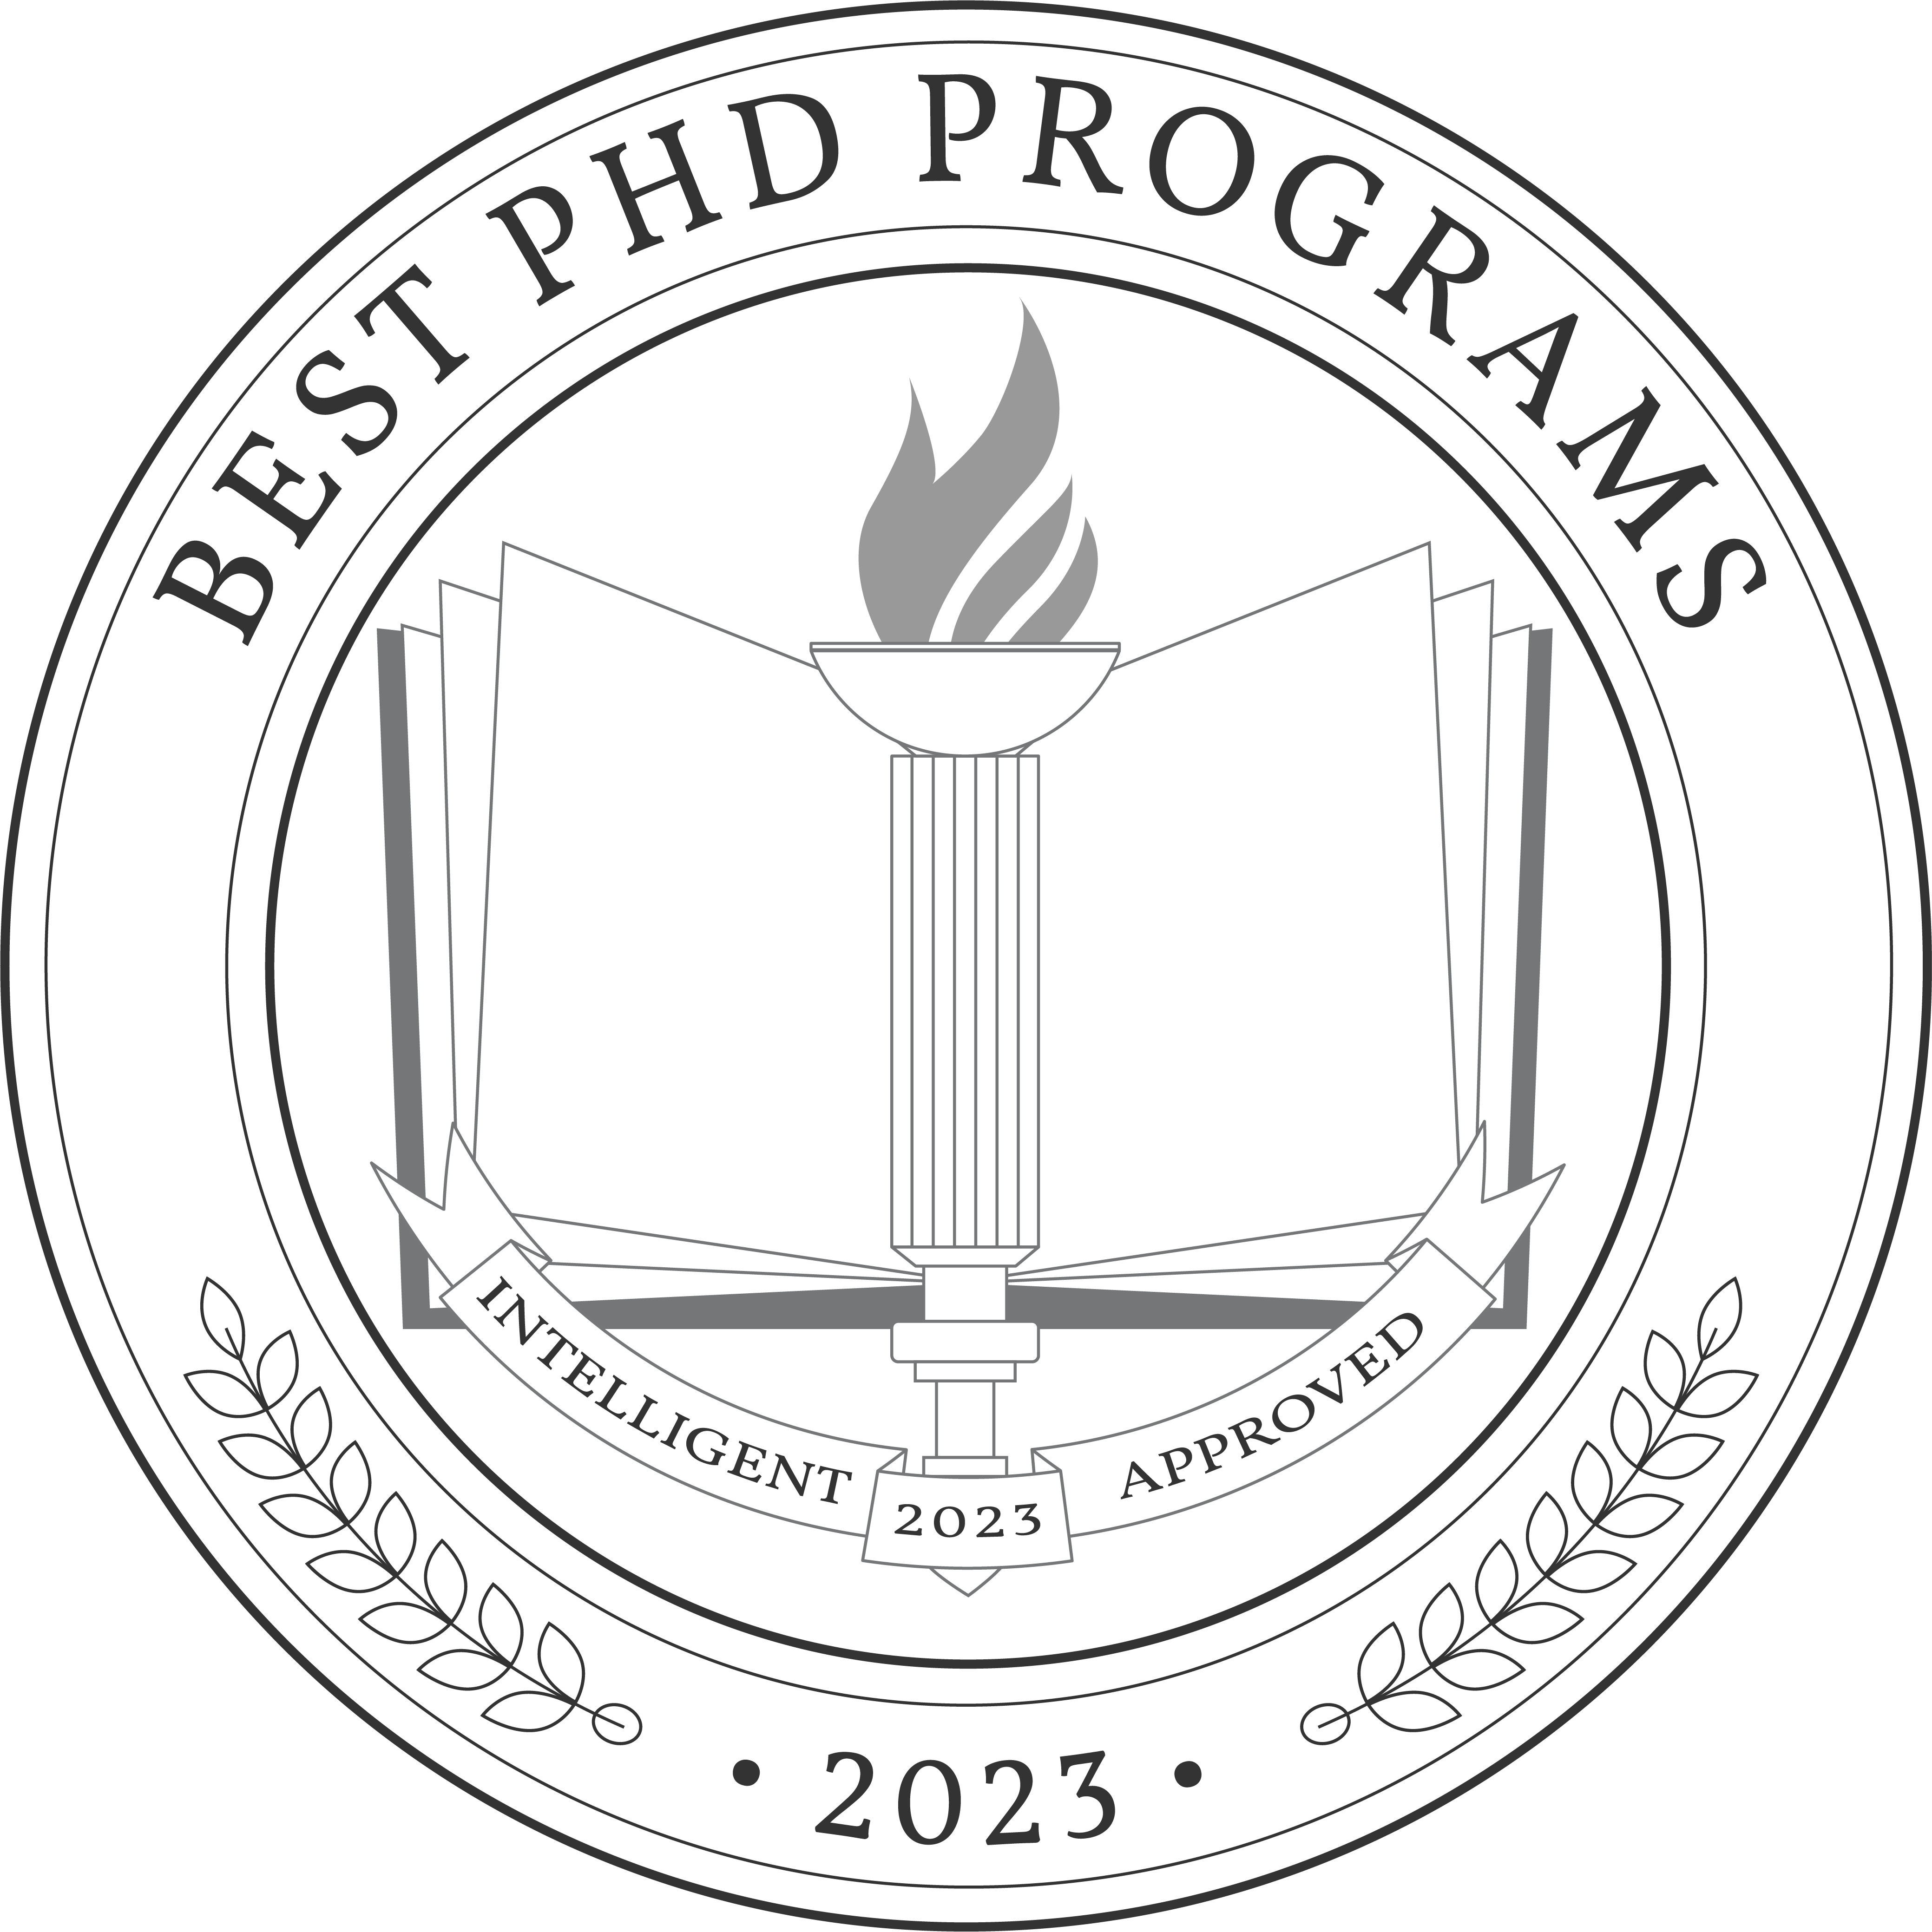 Best PhD Programs 2023 Badge 